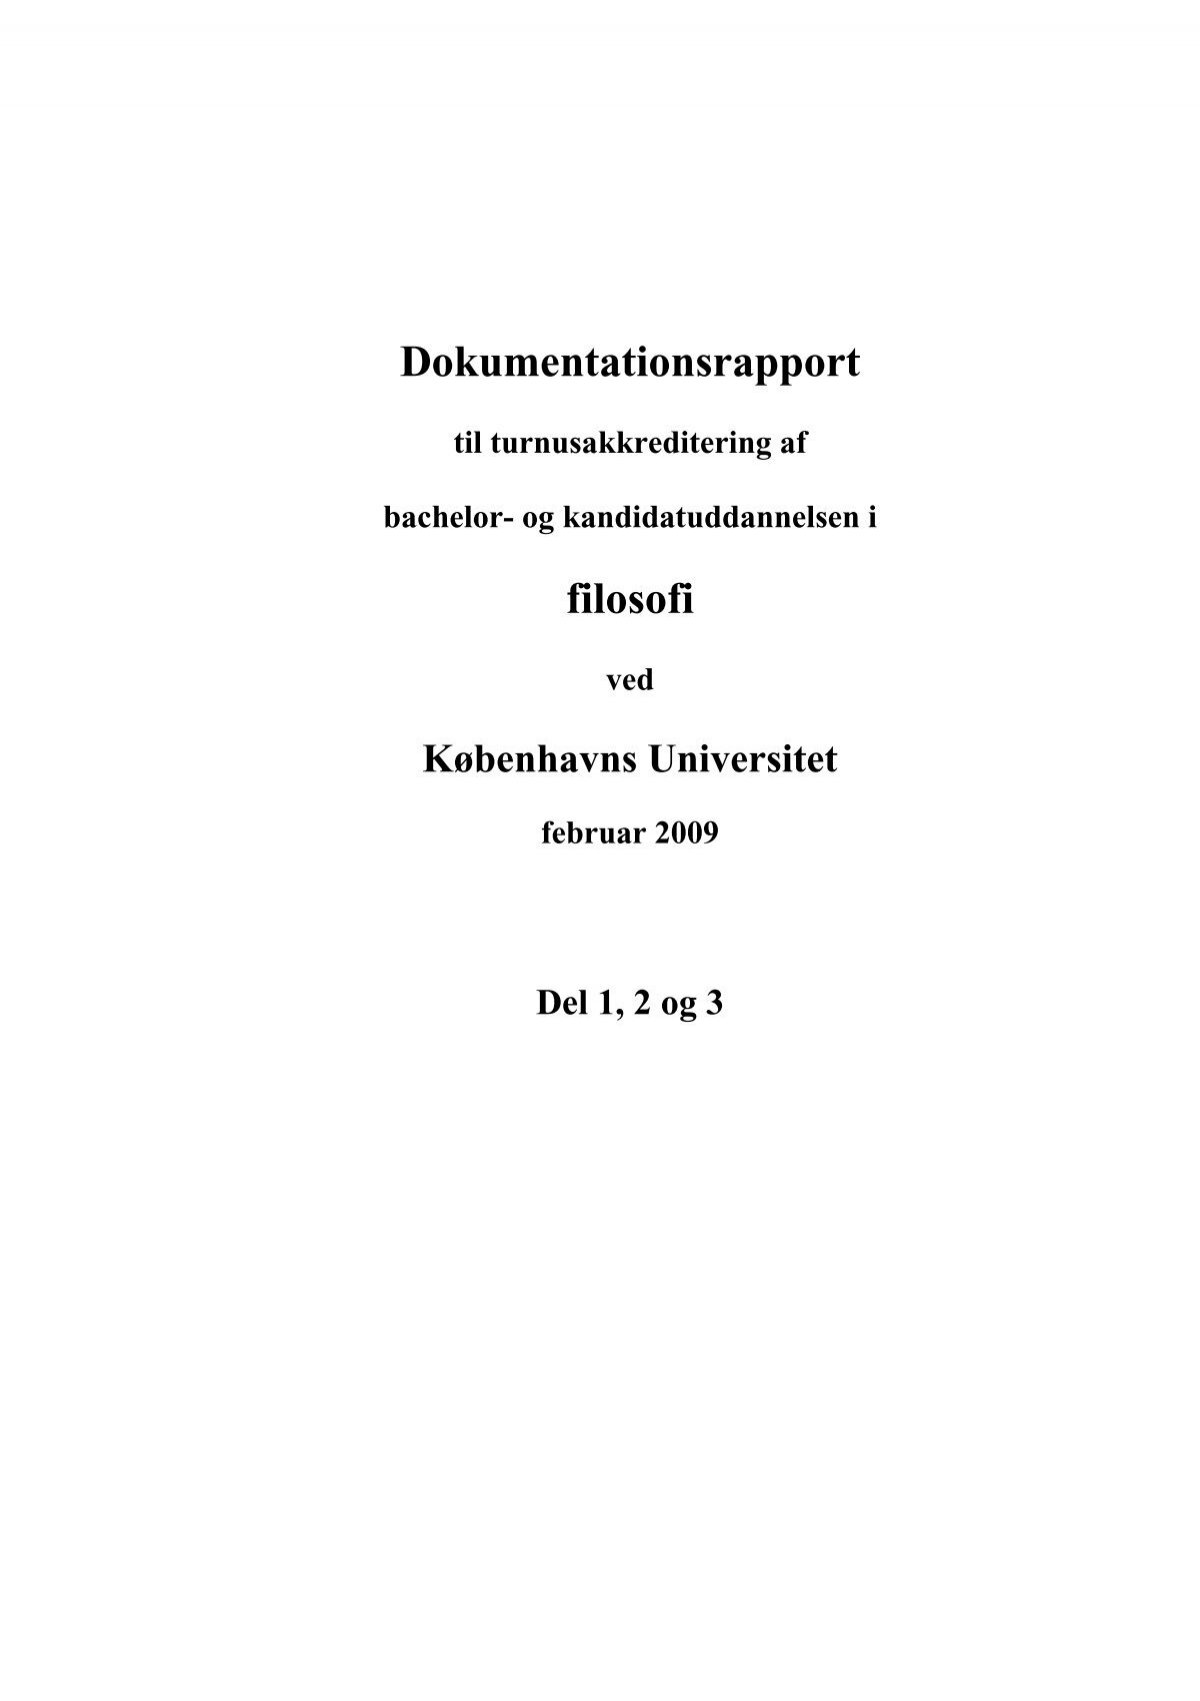 Dokumentationsrapport filosofi - Denmark